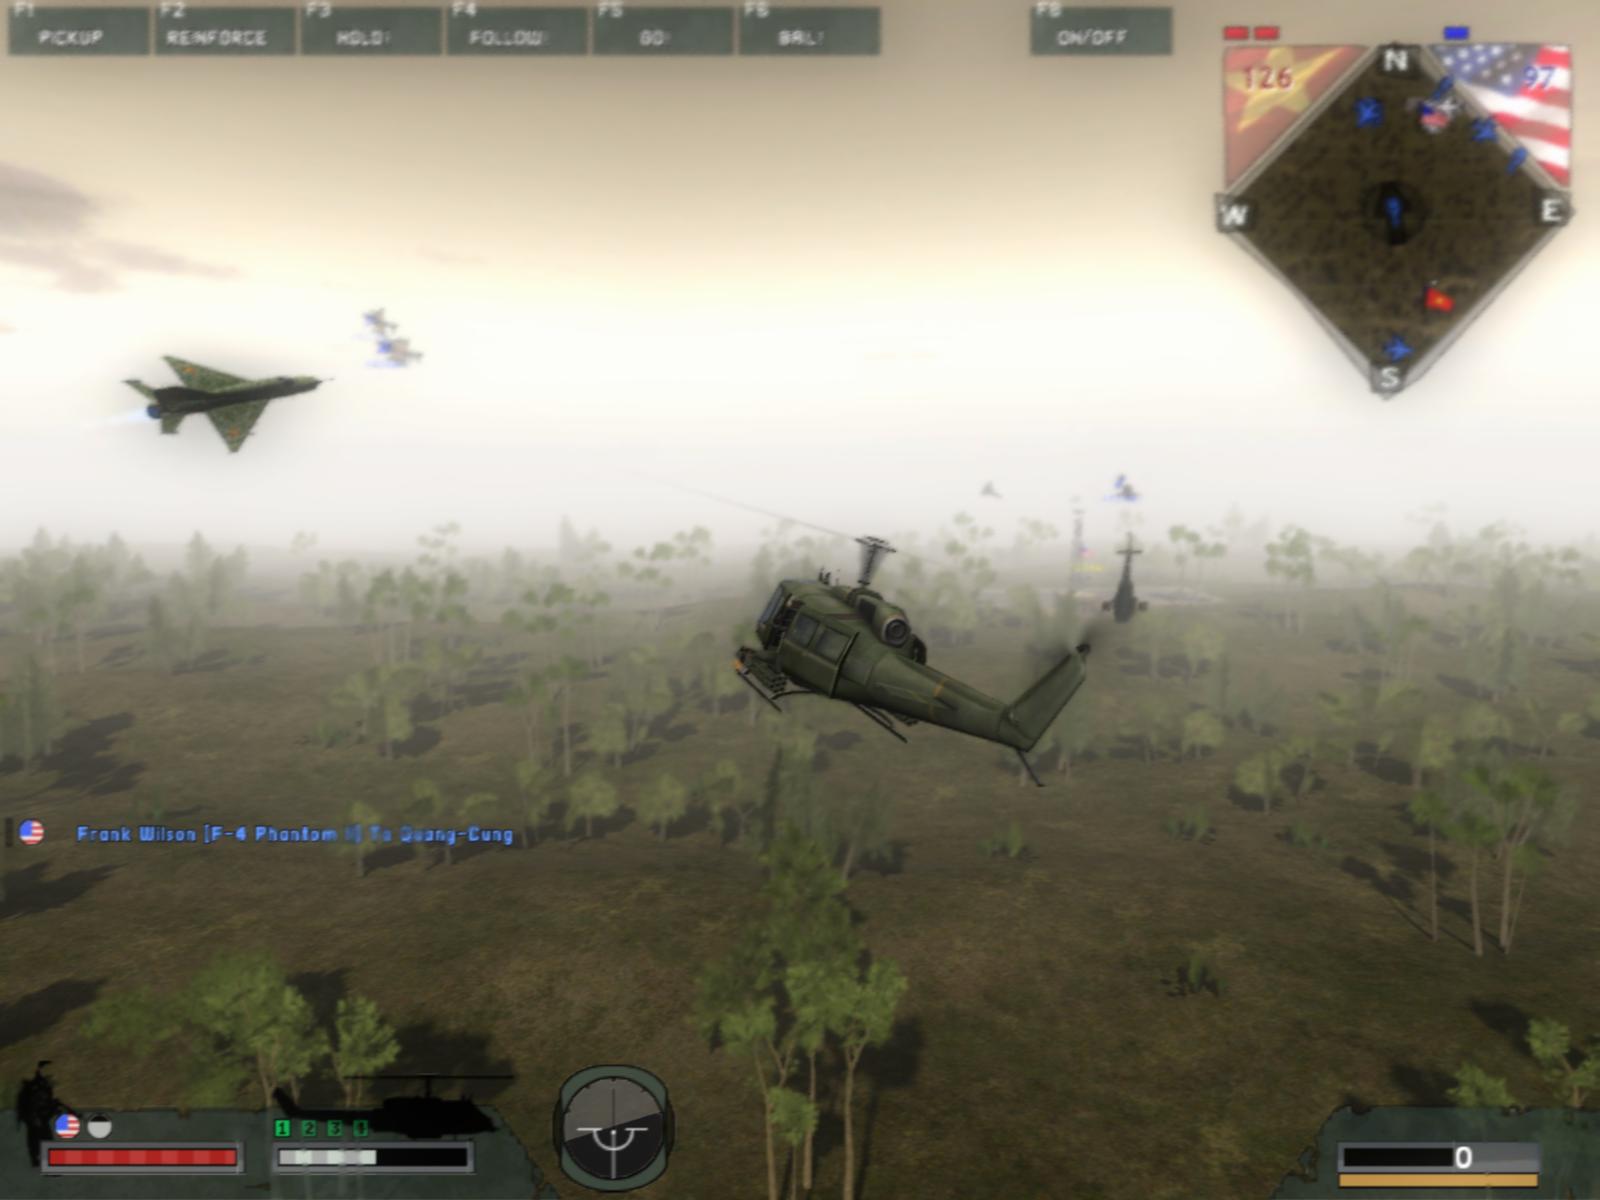 battlefield vietnam download full game purchase